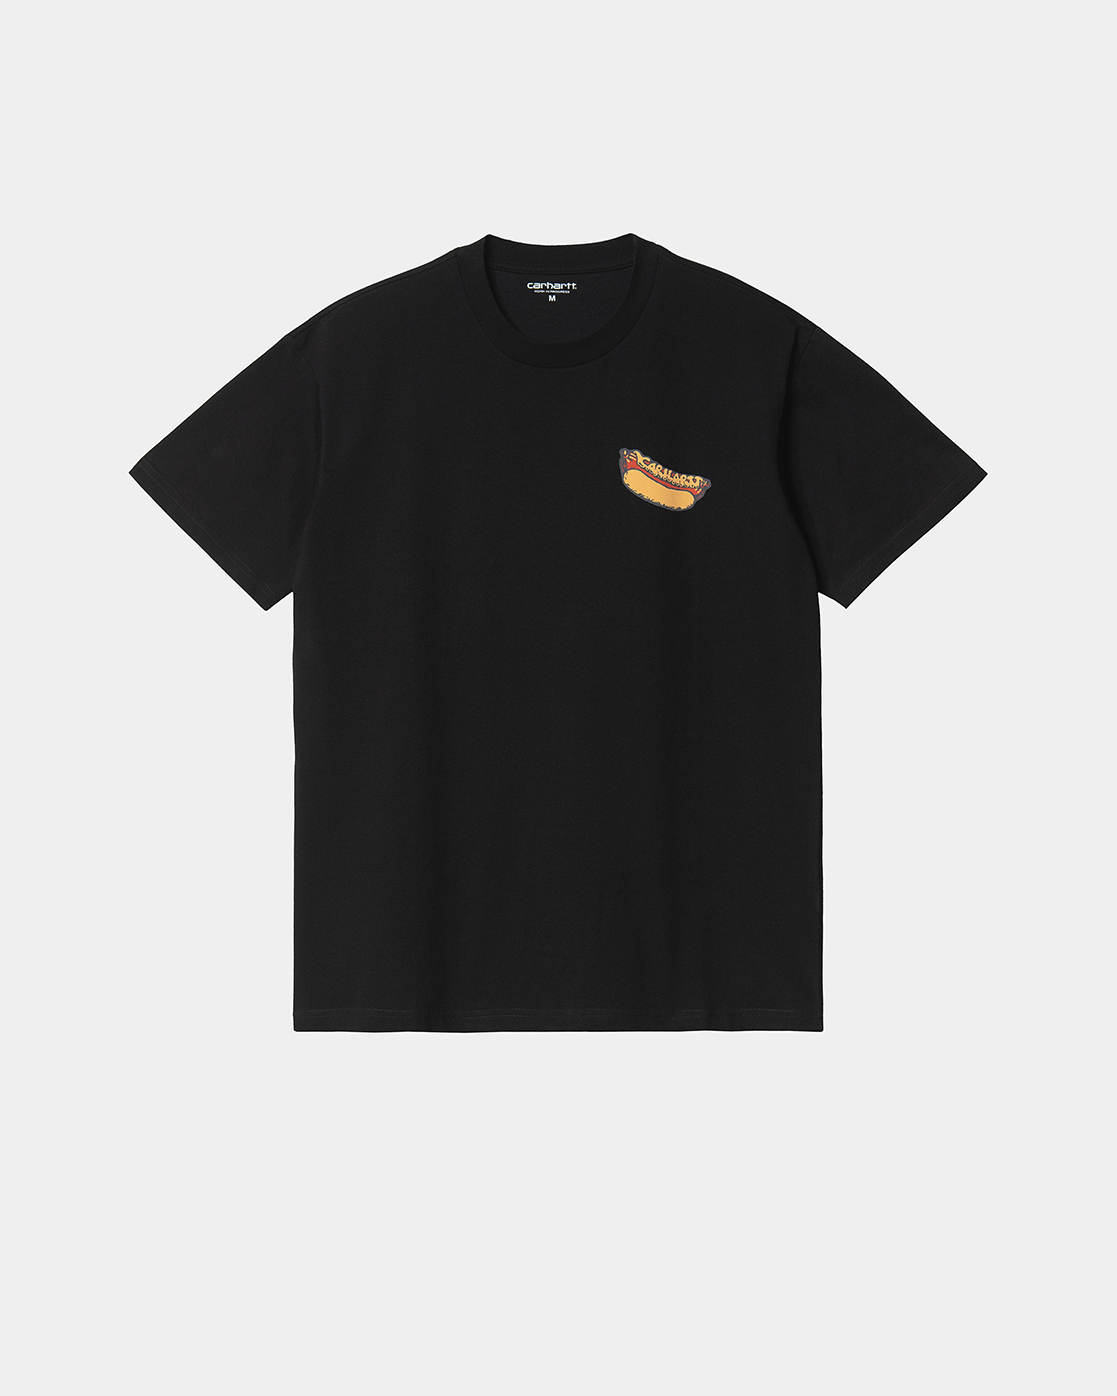 S/s Flavor T-shirt